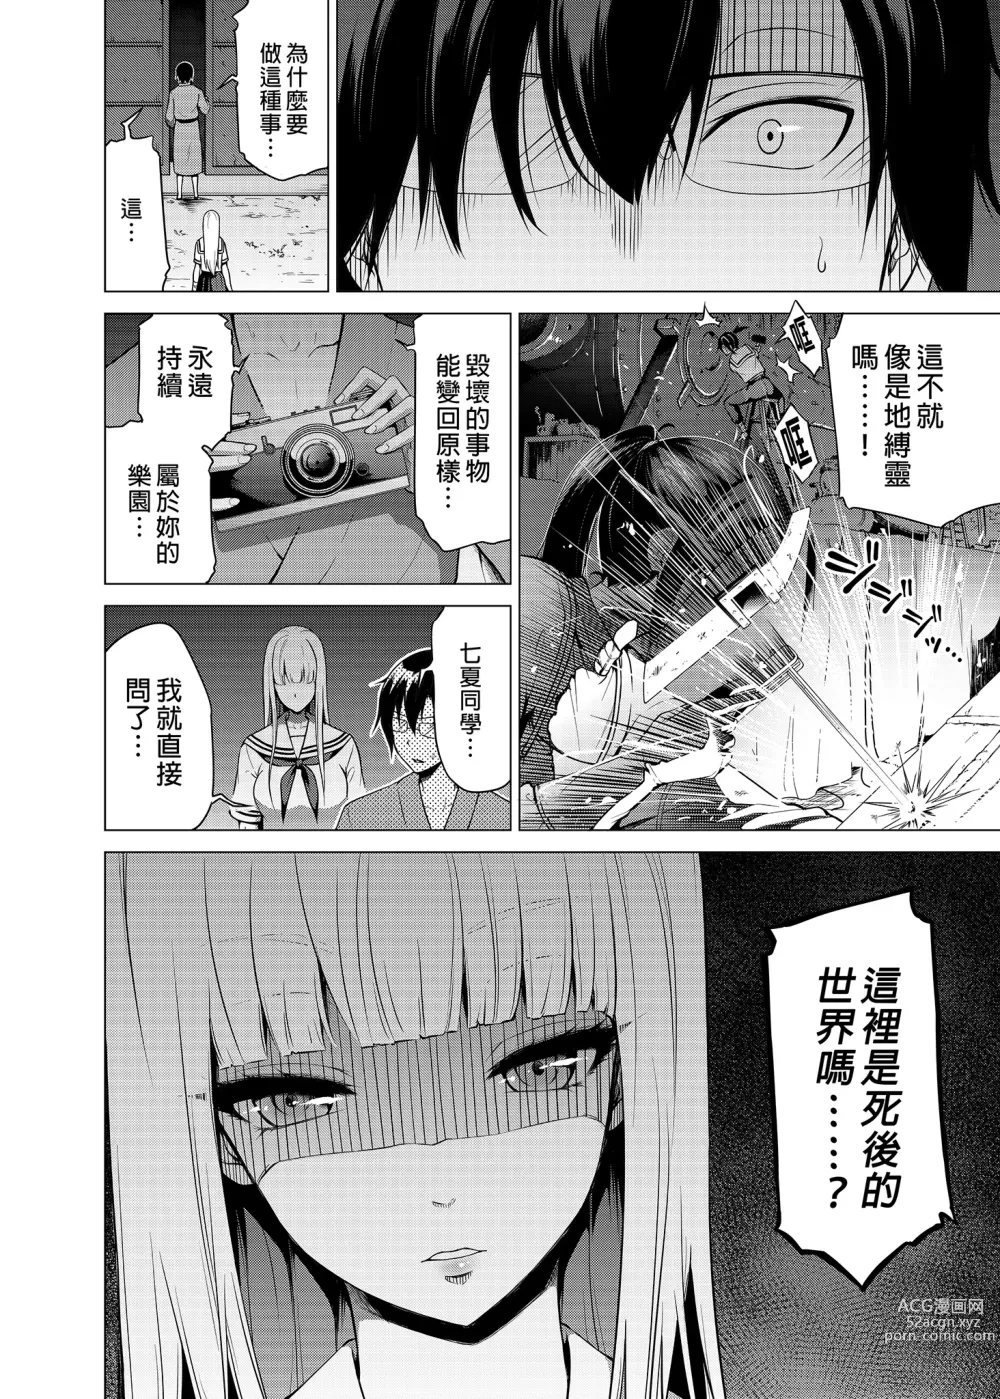 Page 51 of manga 七夏5